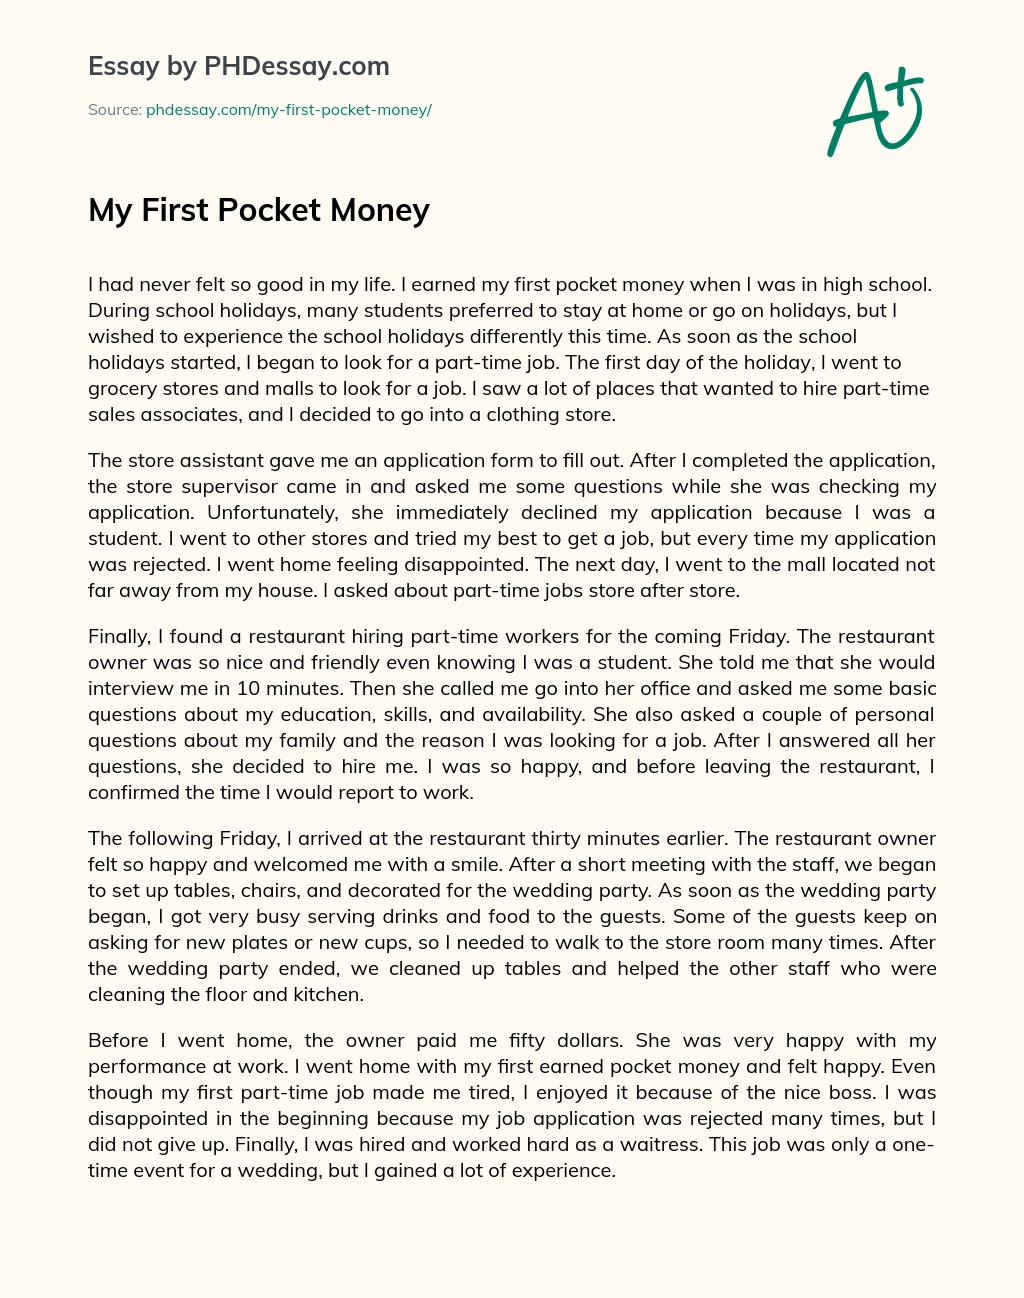 how to earn pocket money essay